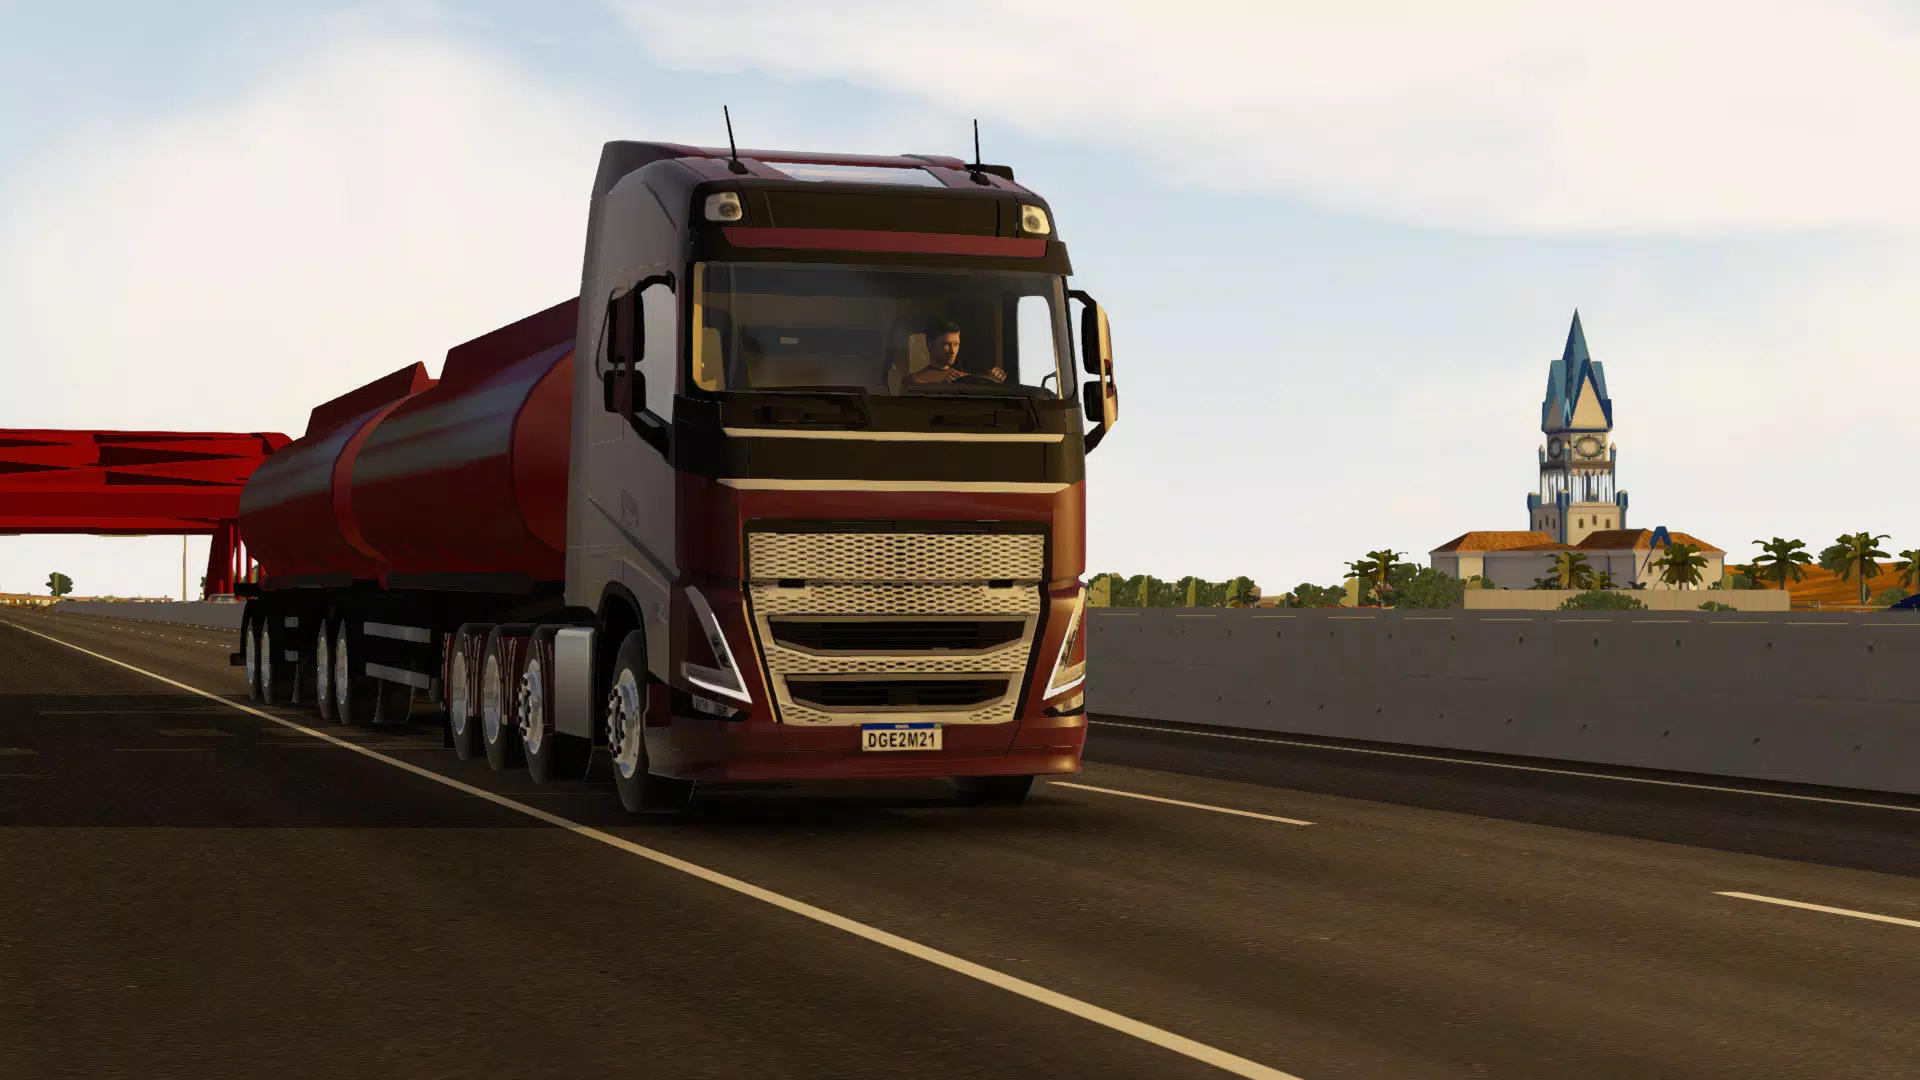 world-truck-driving-simulator